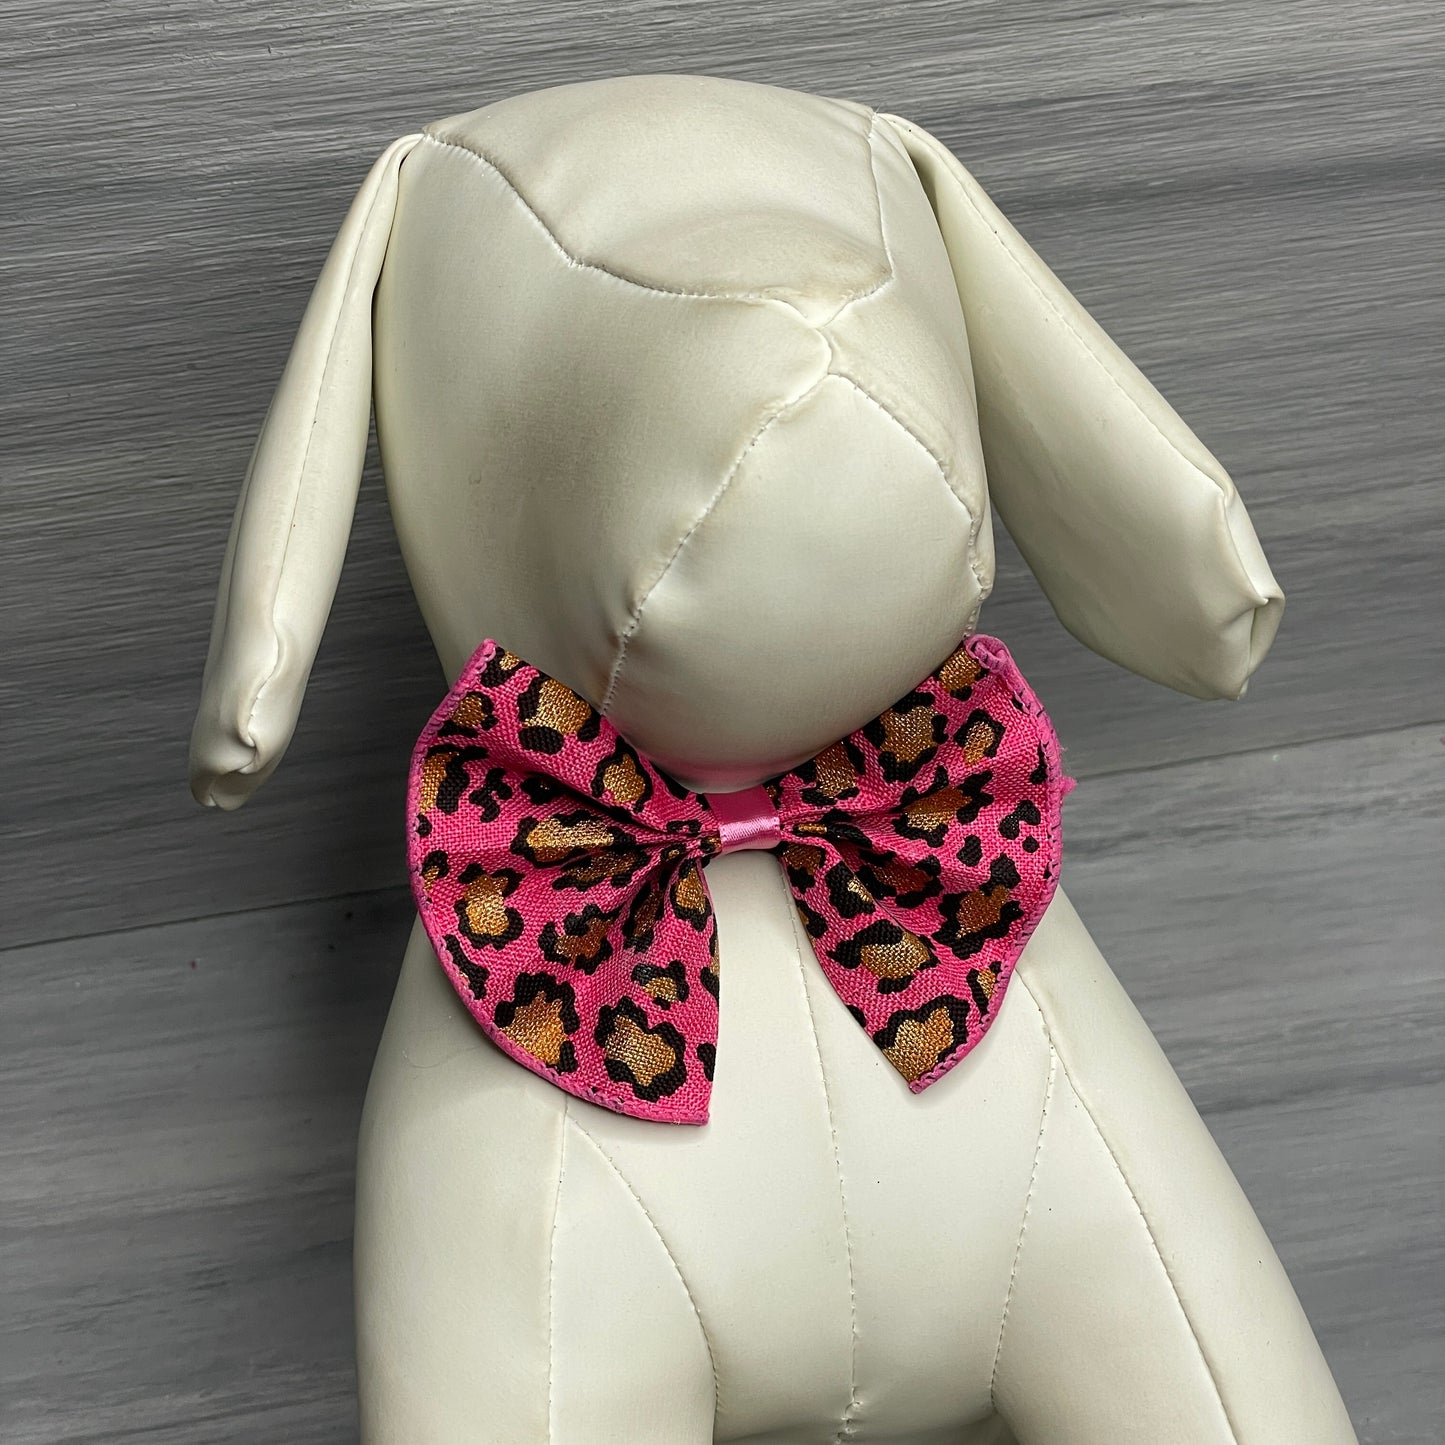 One Sassy Dog - Jumbo Bow Tie - 2 Large Neckties